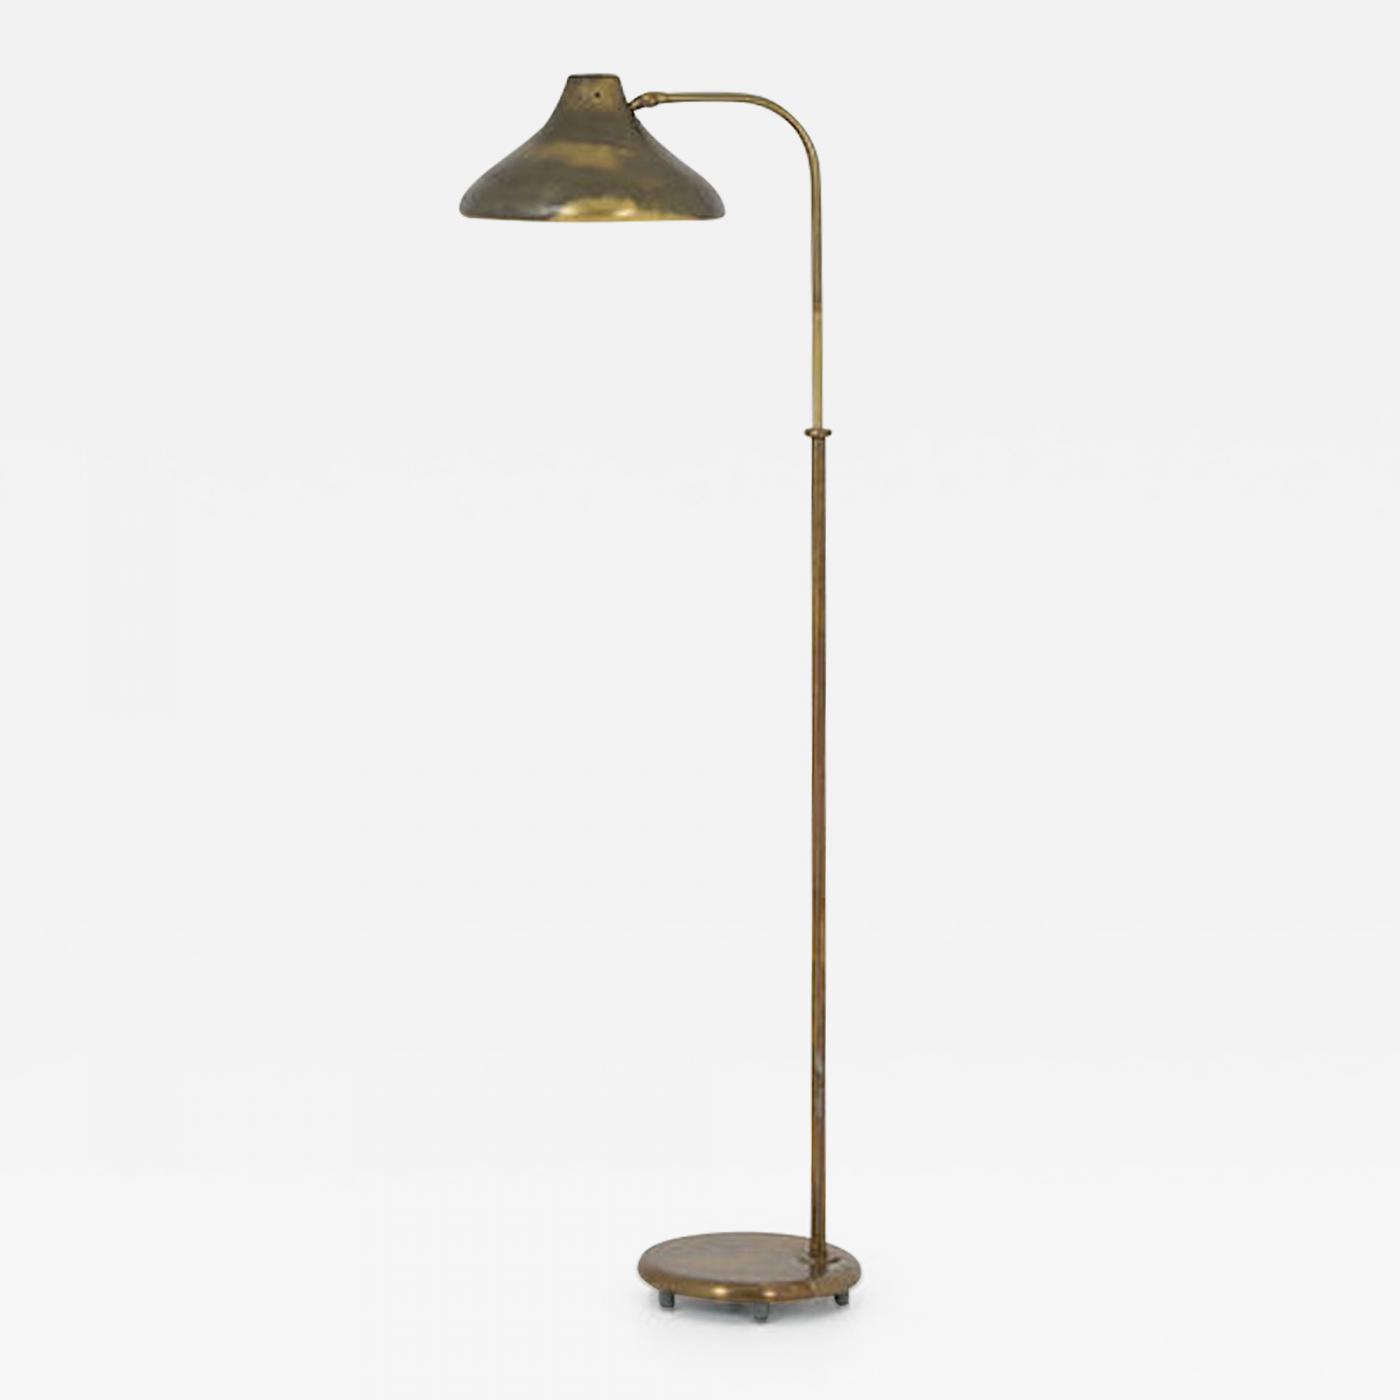 Böhlmarks AB (Bohlmarks) - Swedish Modern Floor Lamp in Brass by Böhlmarks,  1940s